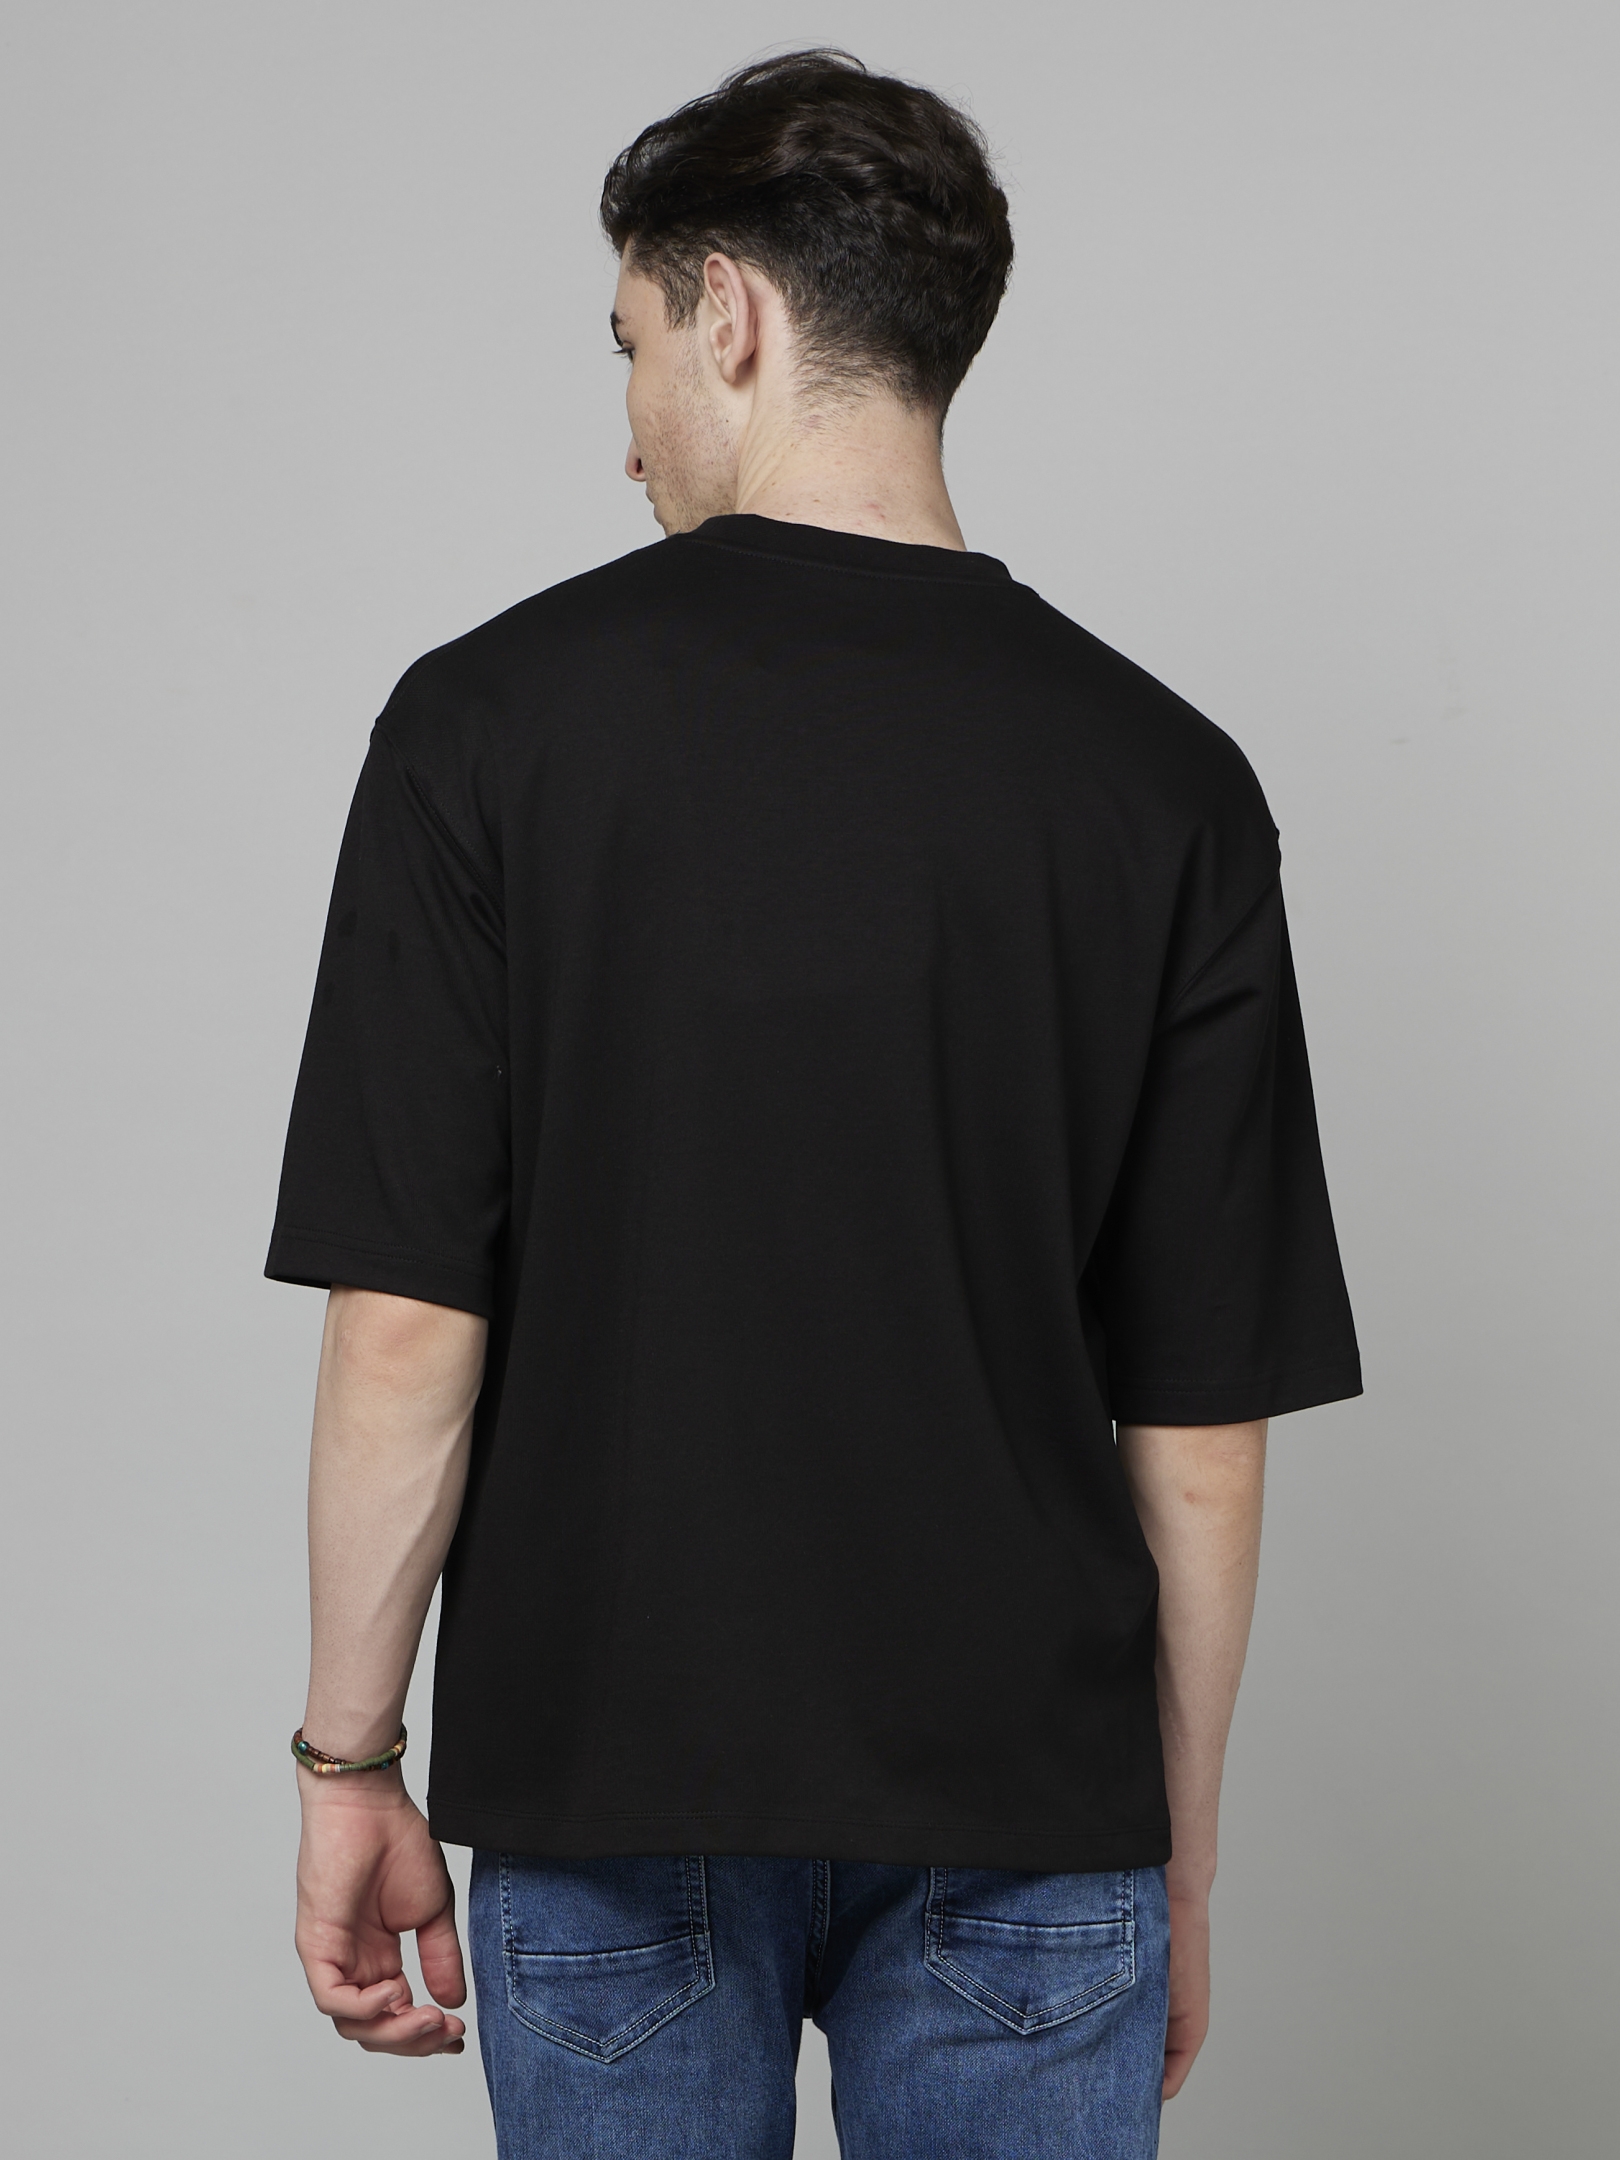 Men's Black Solid Boxy T-Shirt